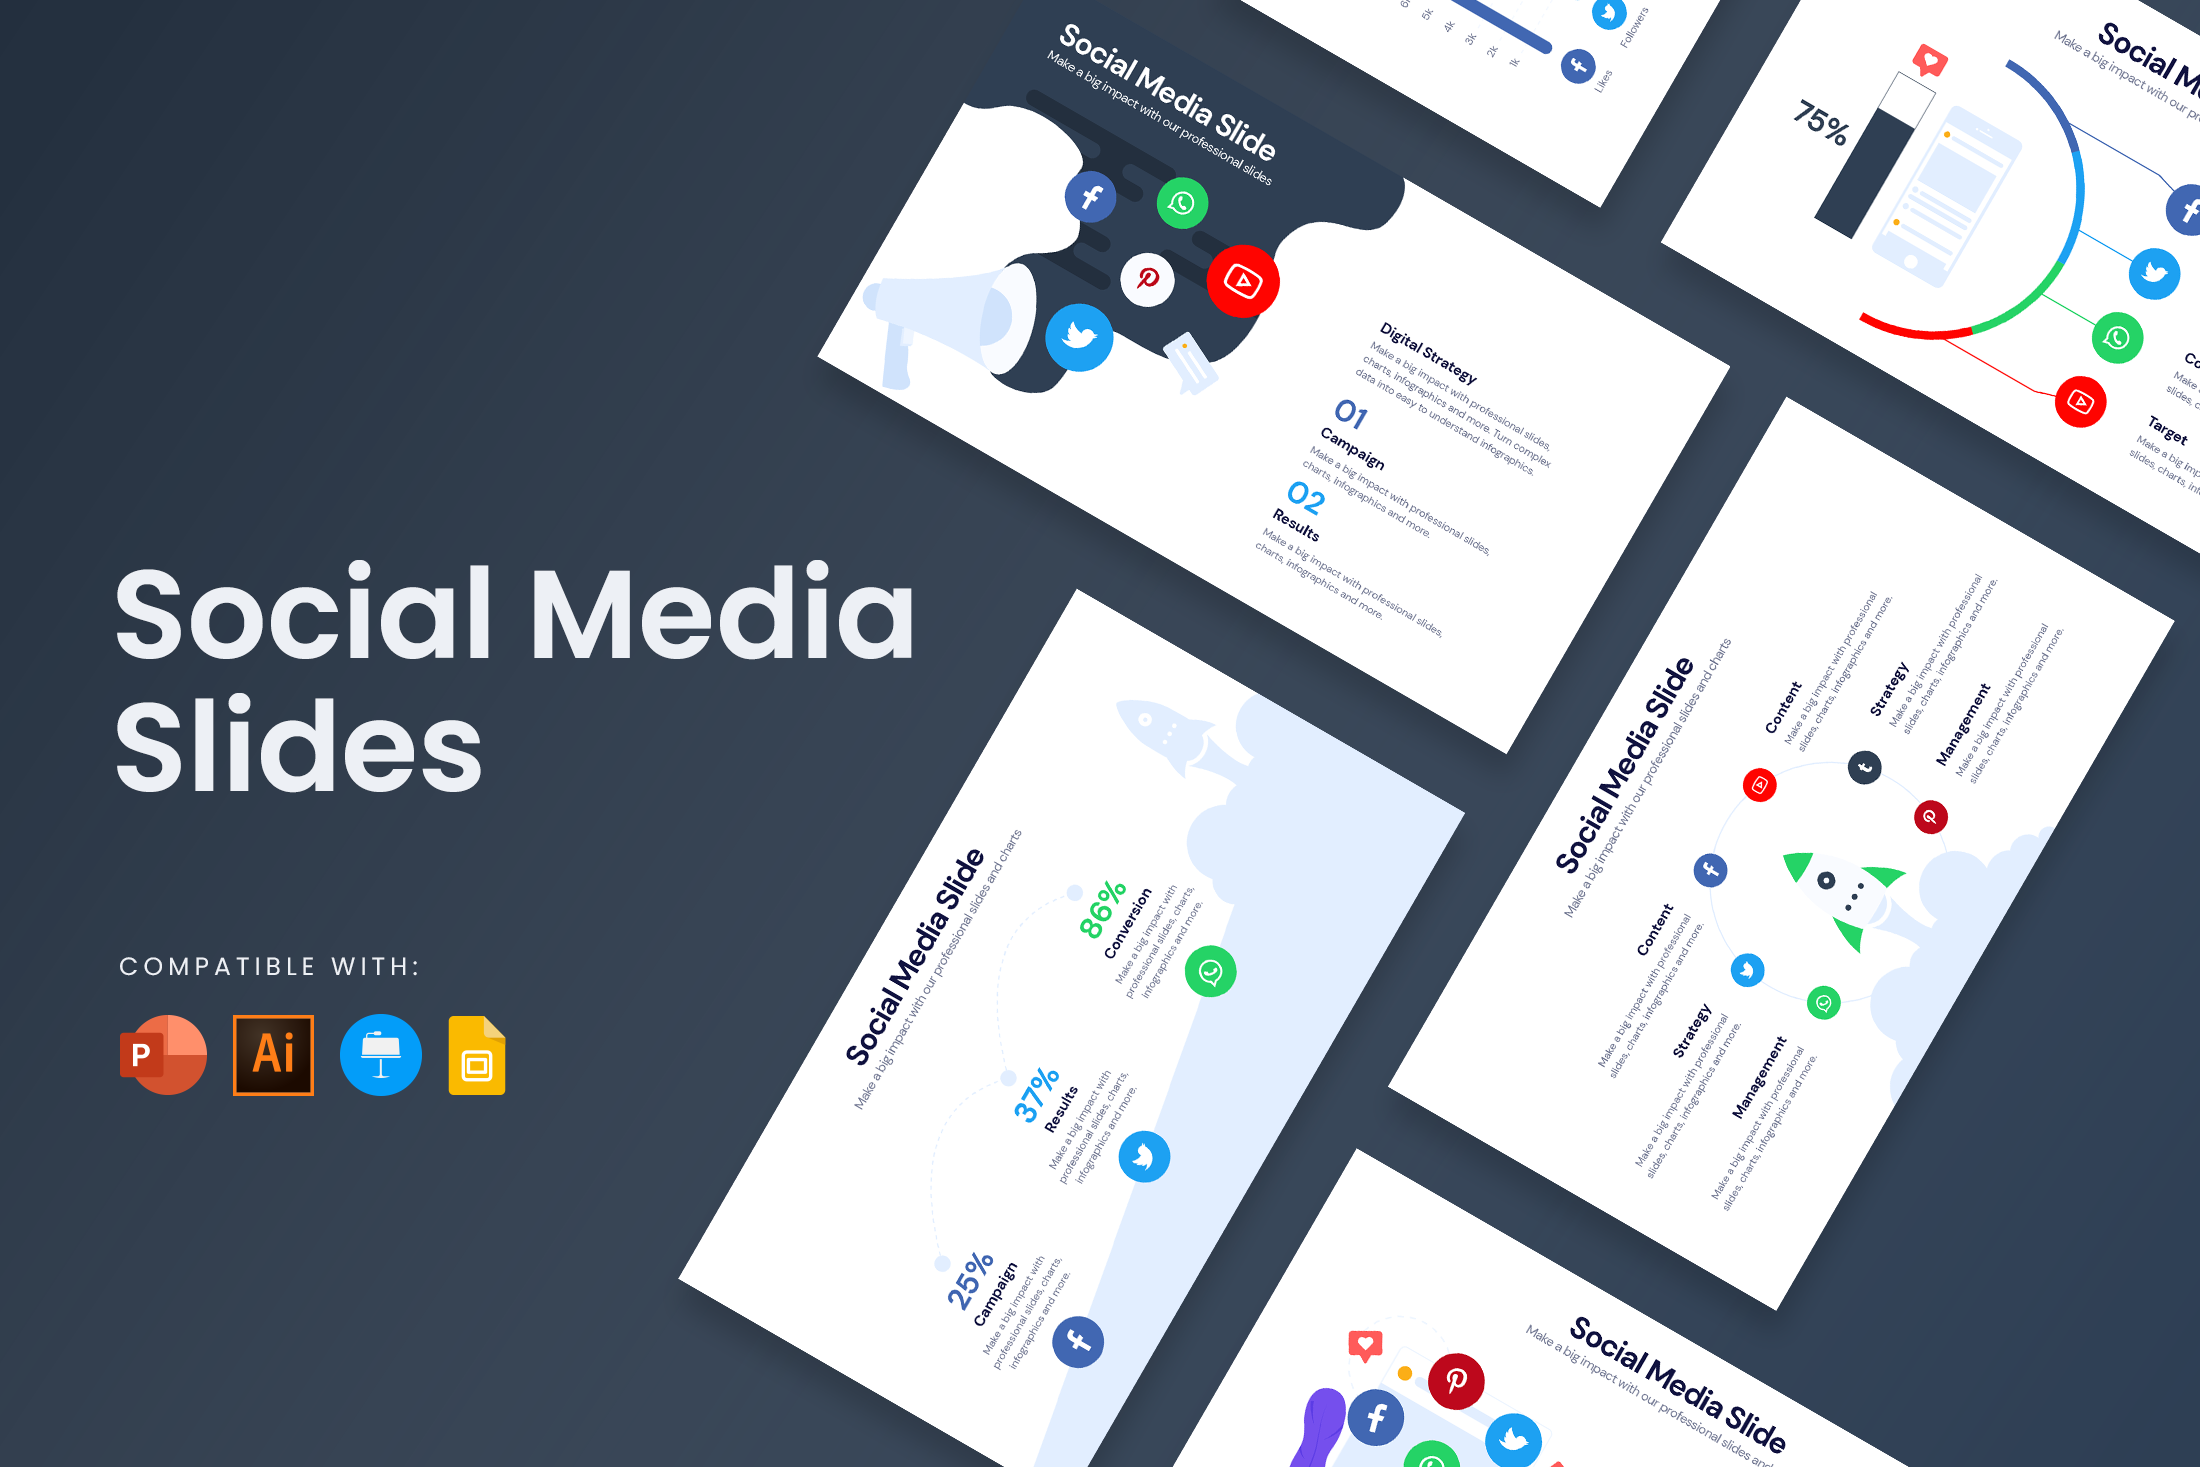 social media infographics design